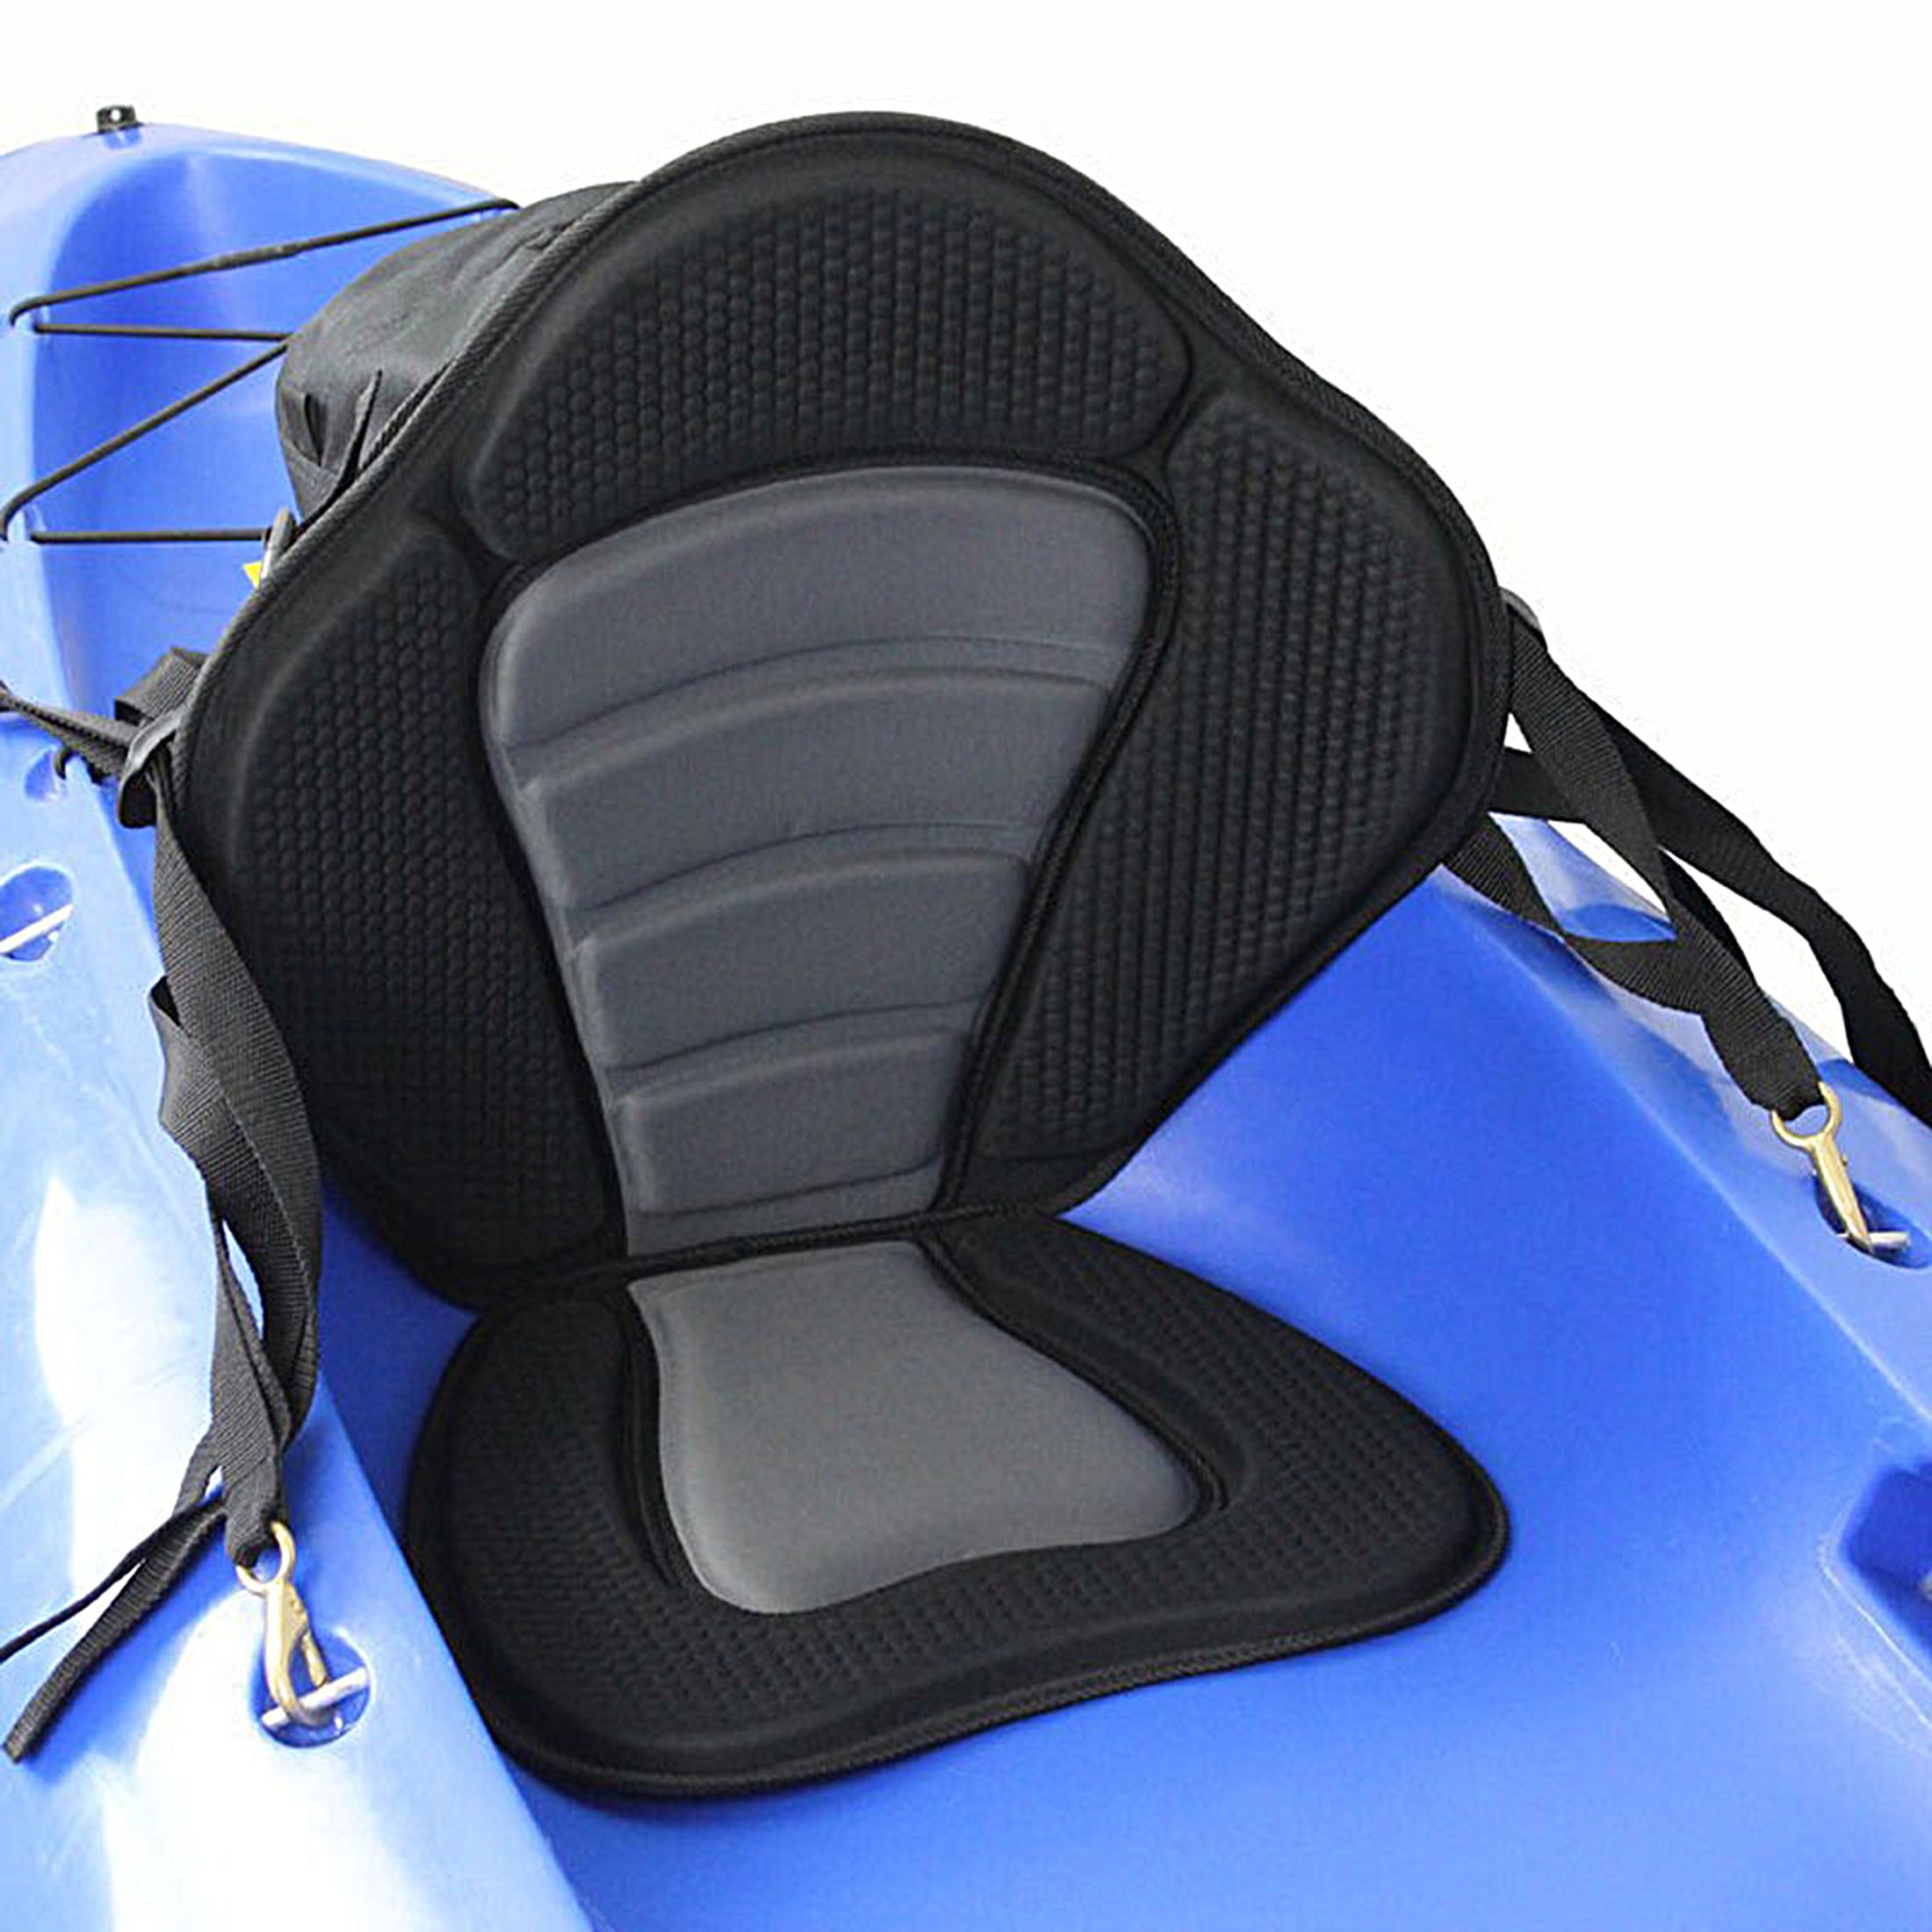 Seat Pad for Kayaks Adhesive Style- Comfortable Cushioning for Kayak Riber 